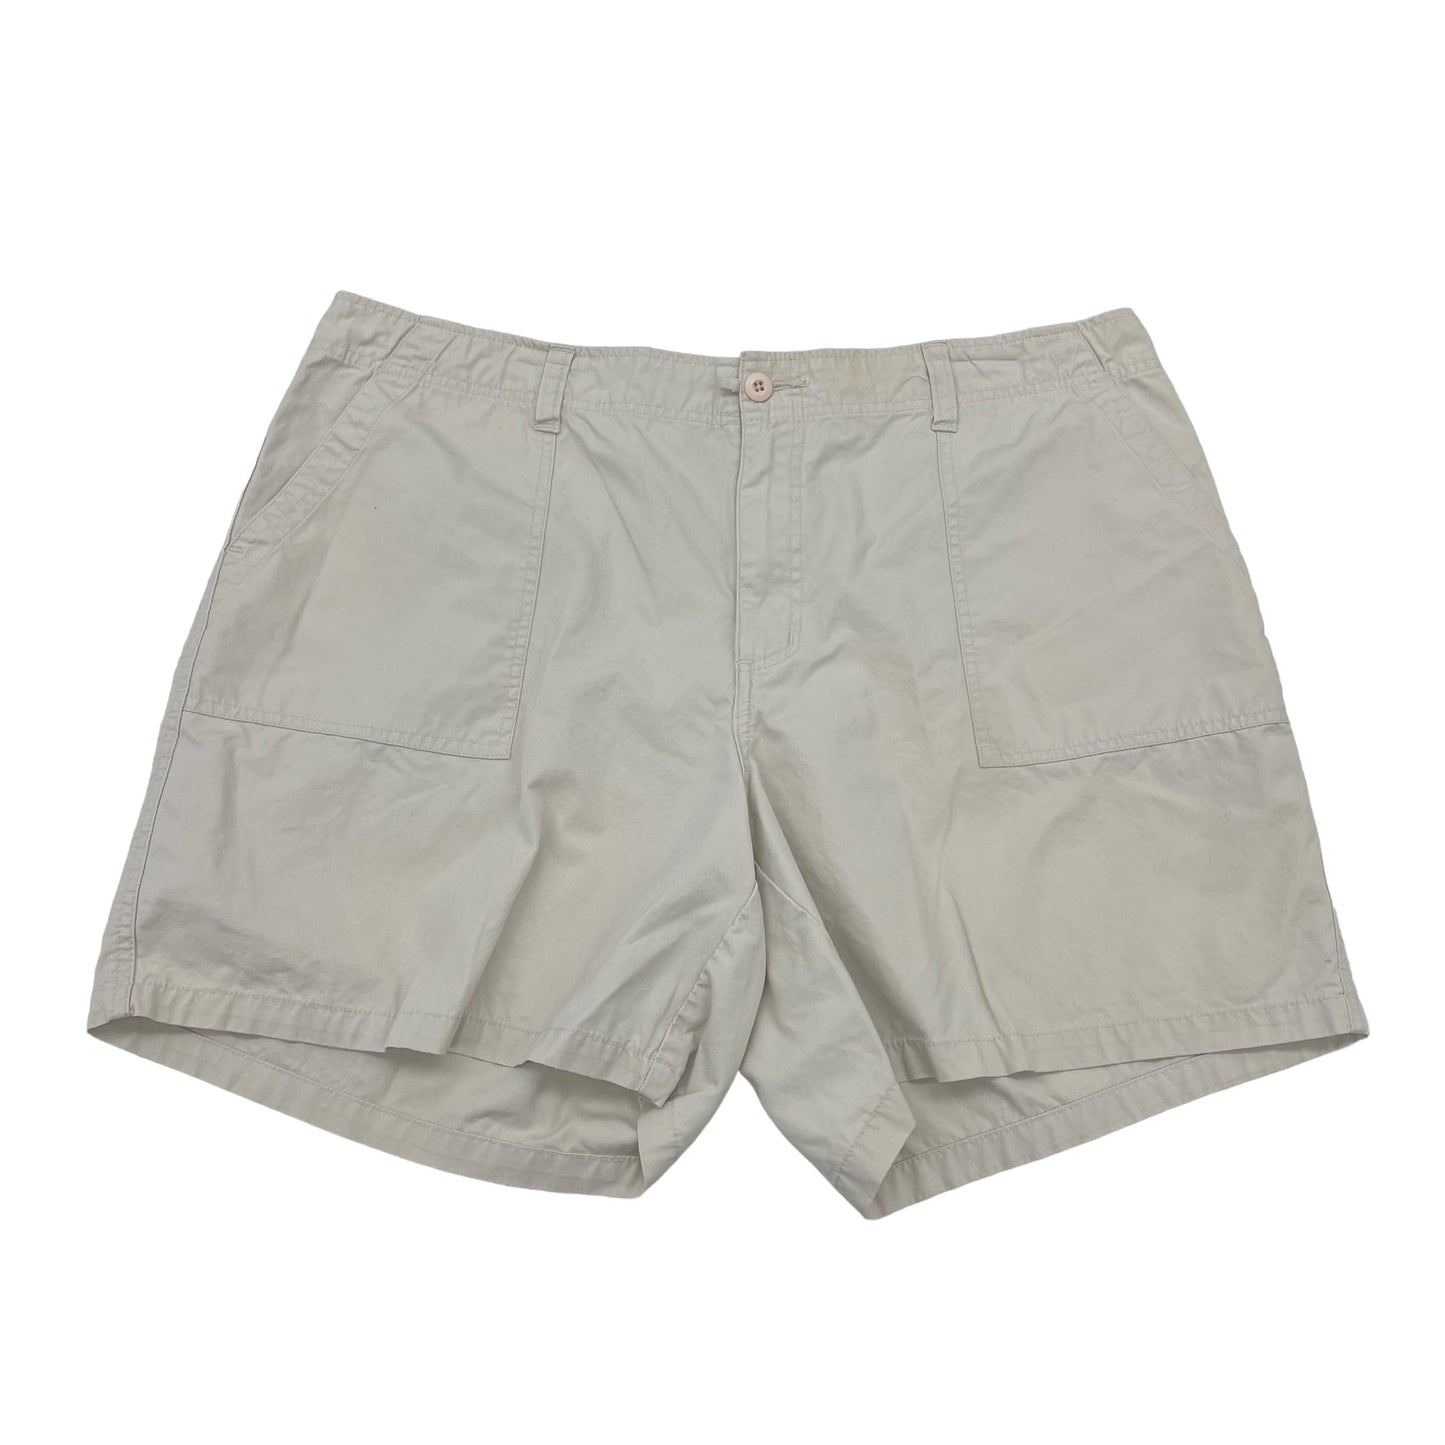 Tan Shorts Clothes Mentor, Size 16